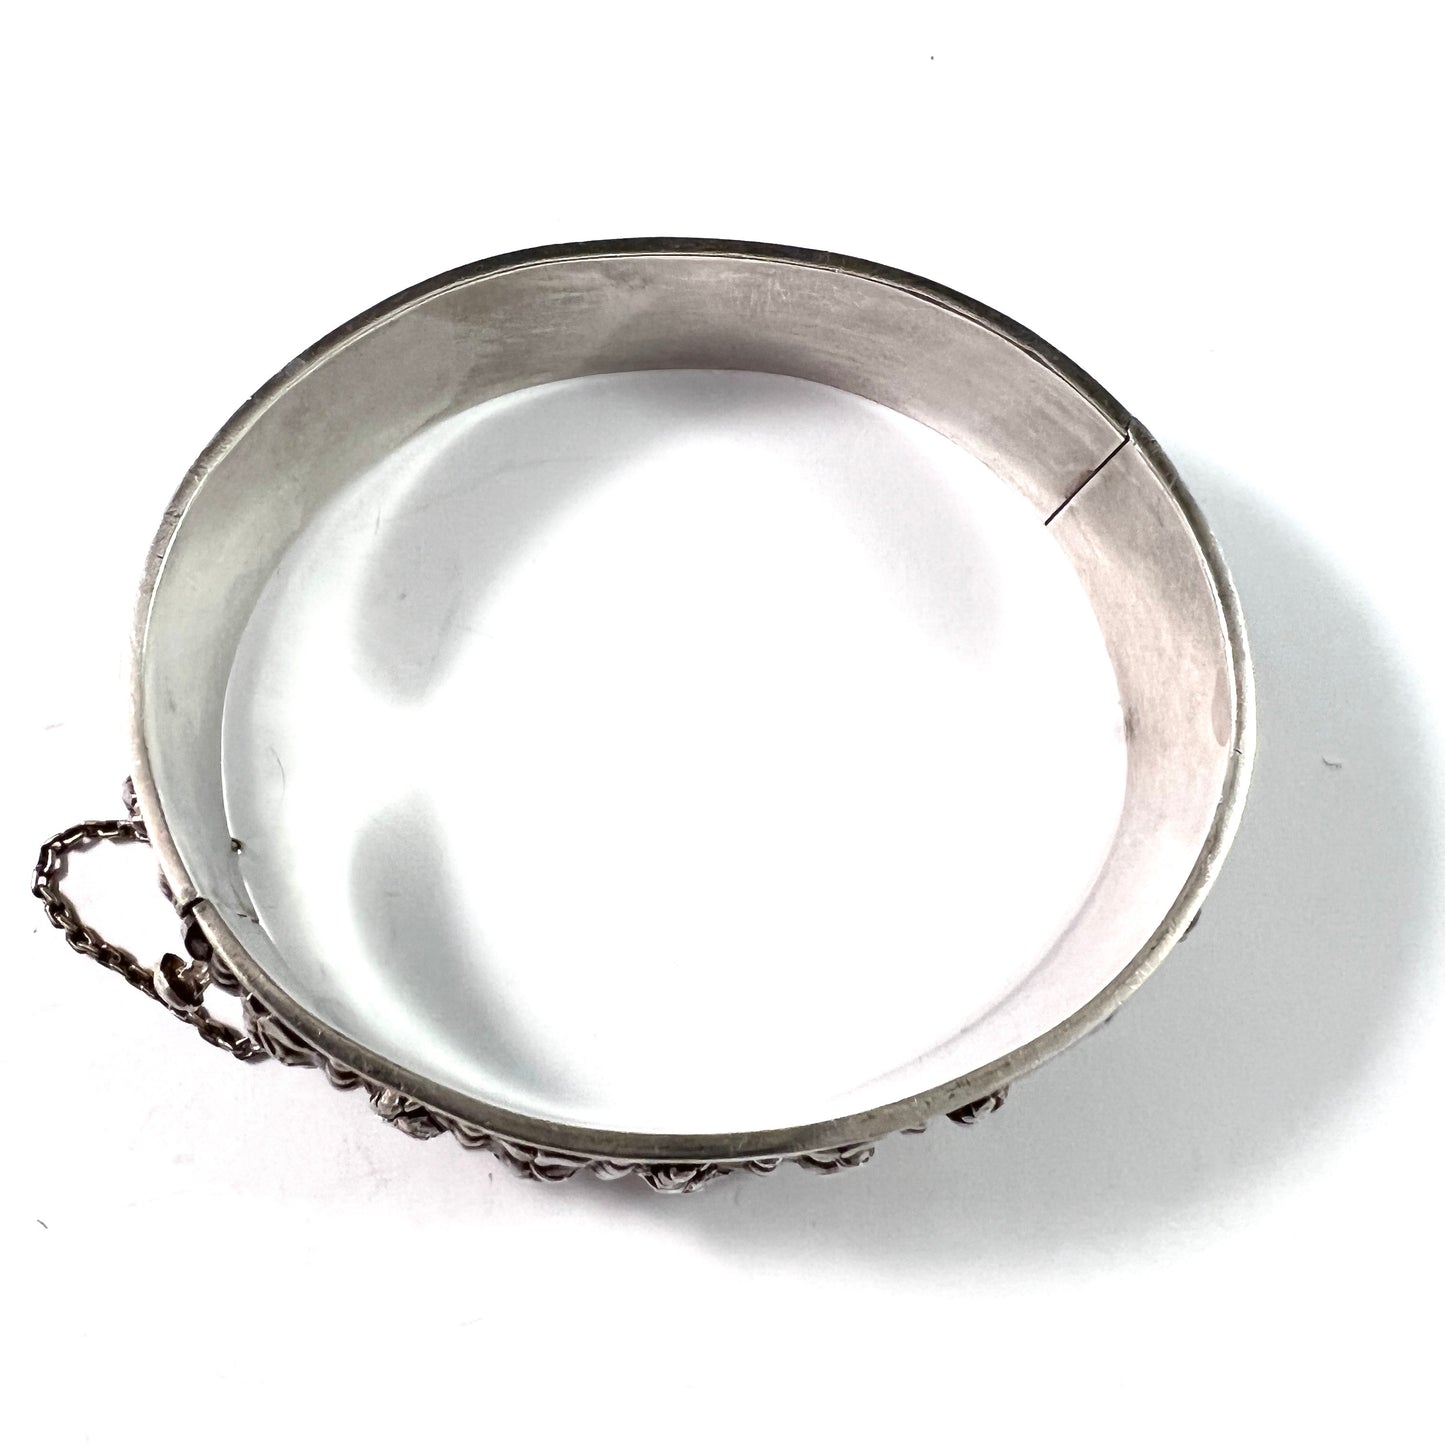 Swedish Import (Portugal) 1940s. Solid Silver Open/Close Bangle Flower Bracelet.